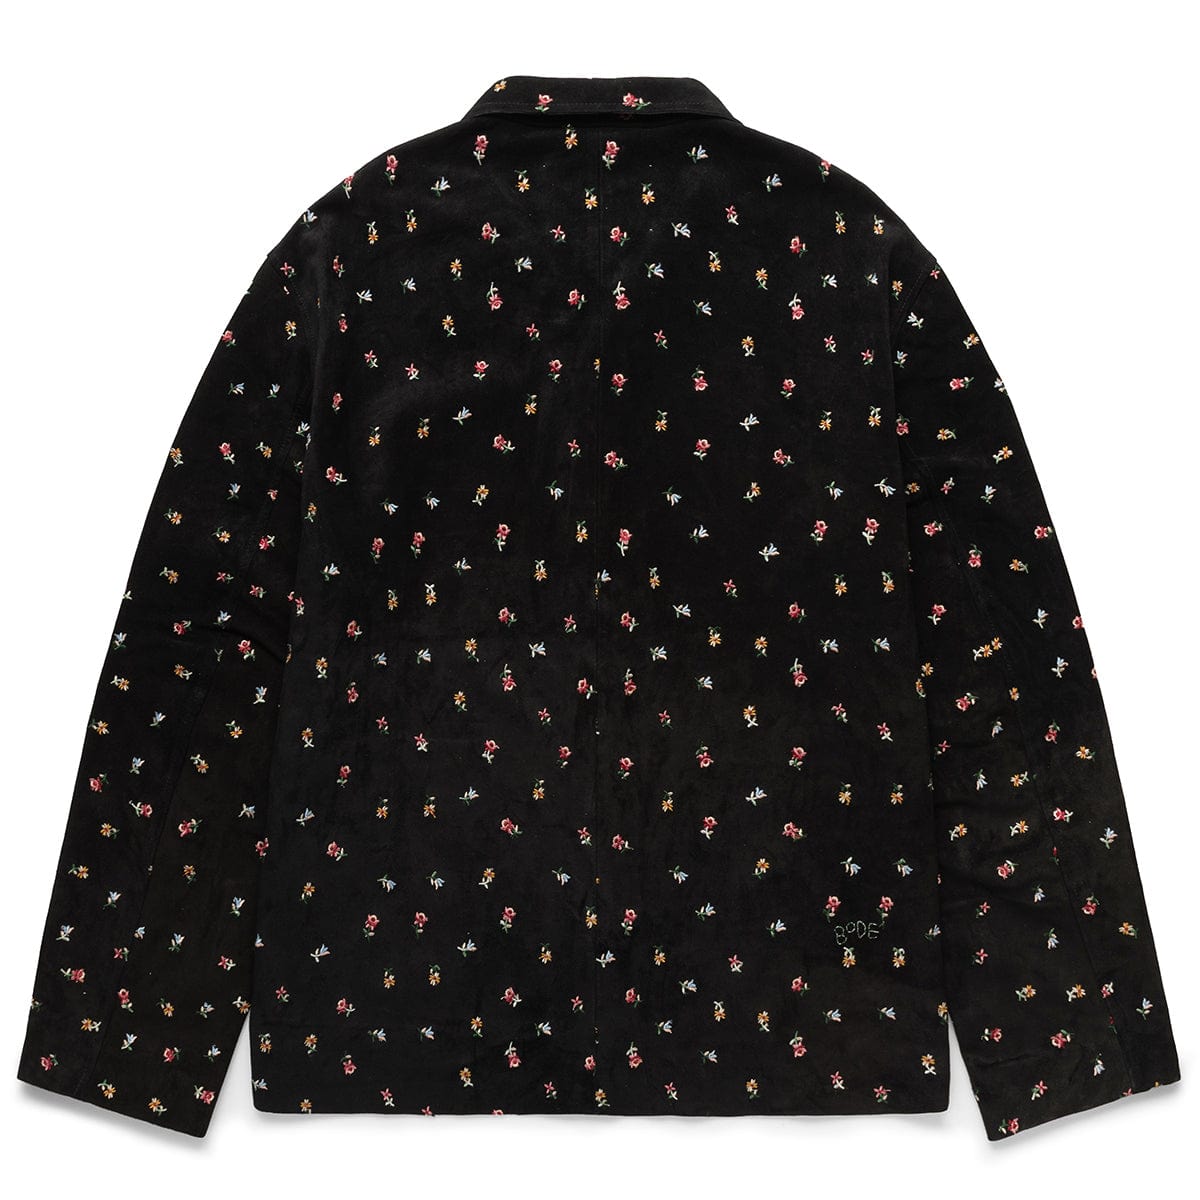 Bode Black, Pattern Print Patterned Jacket M